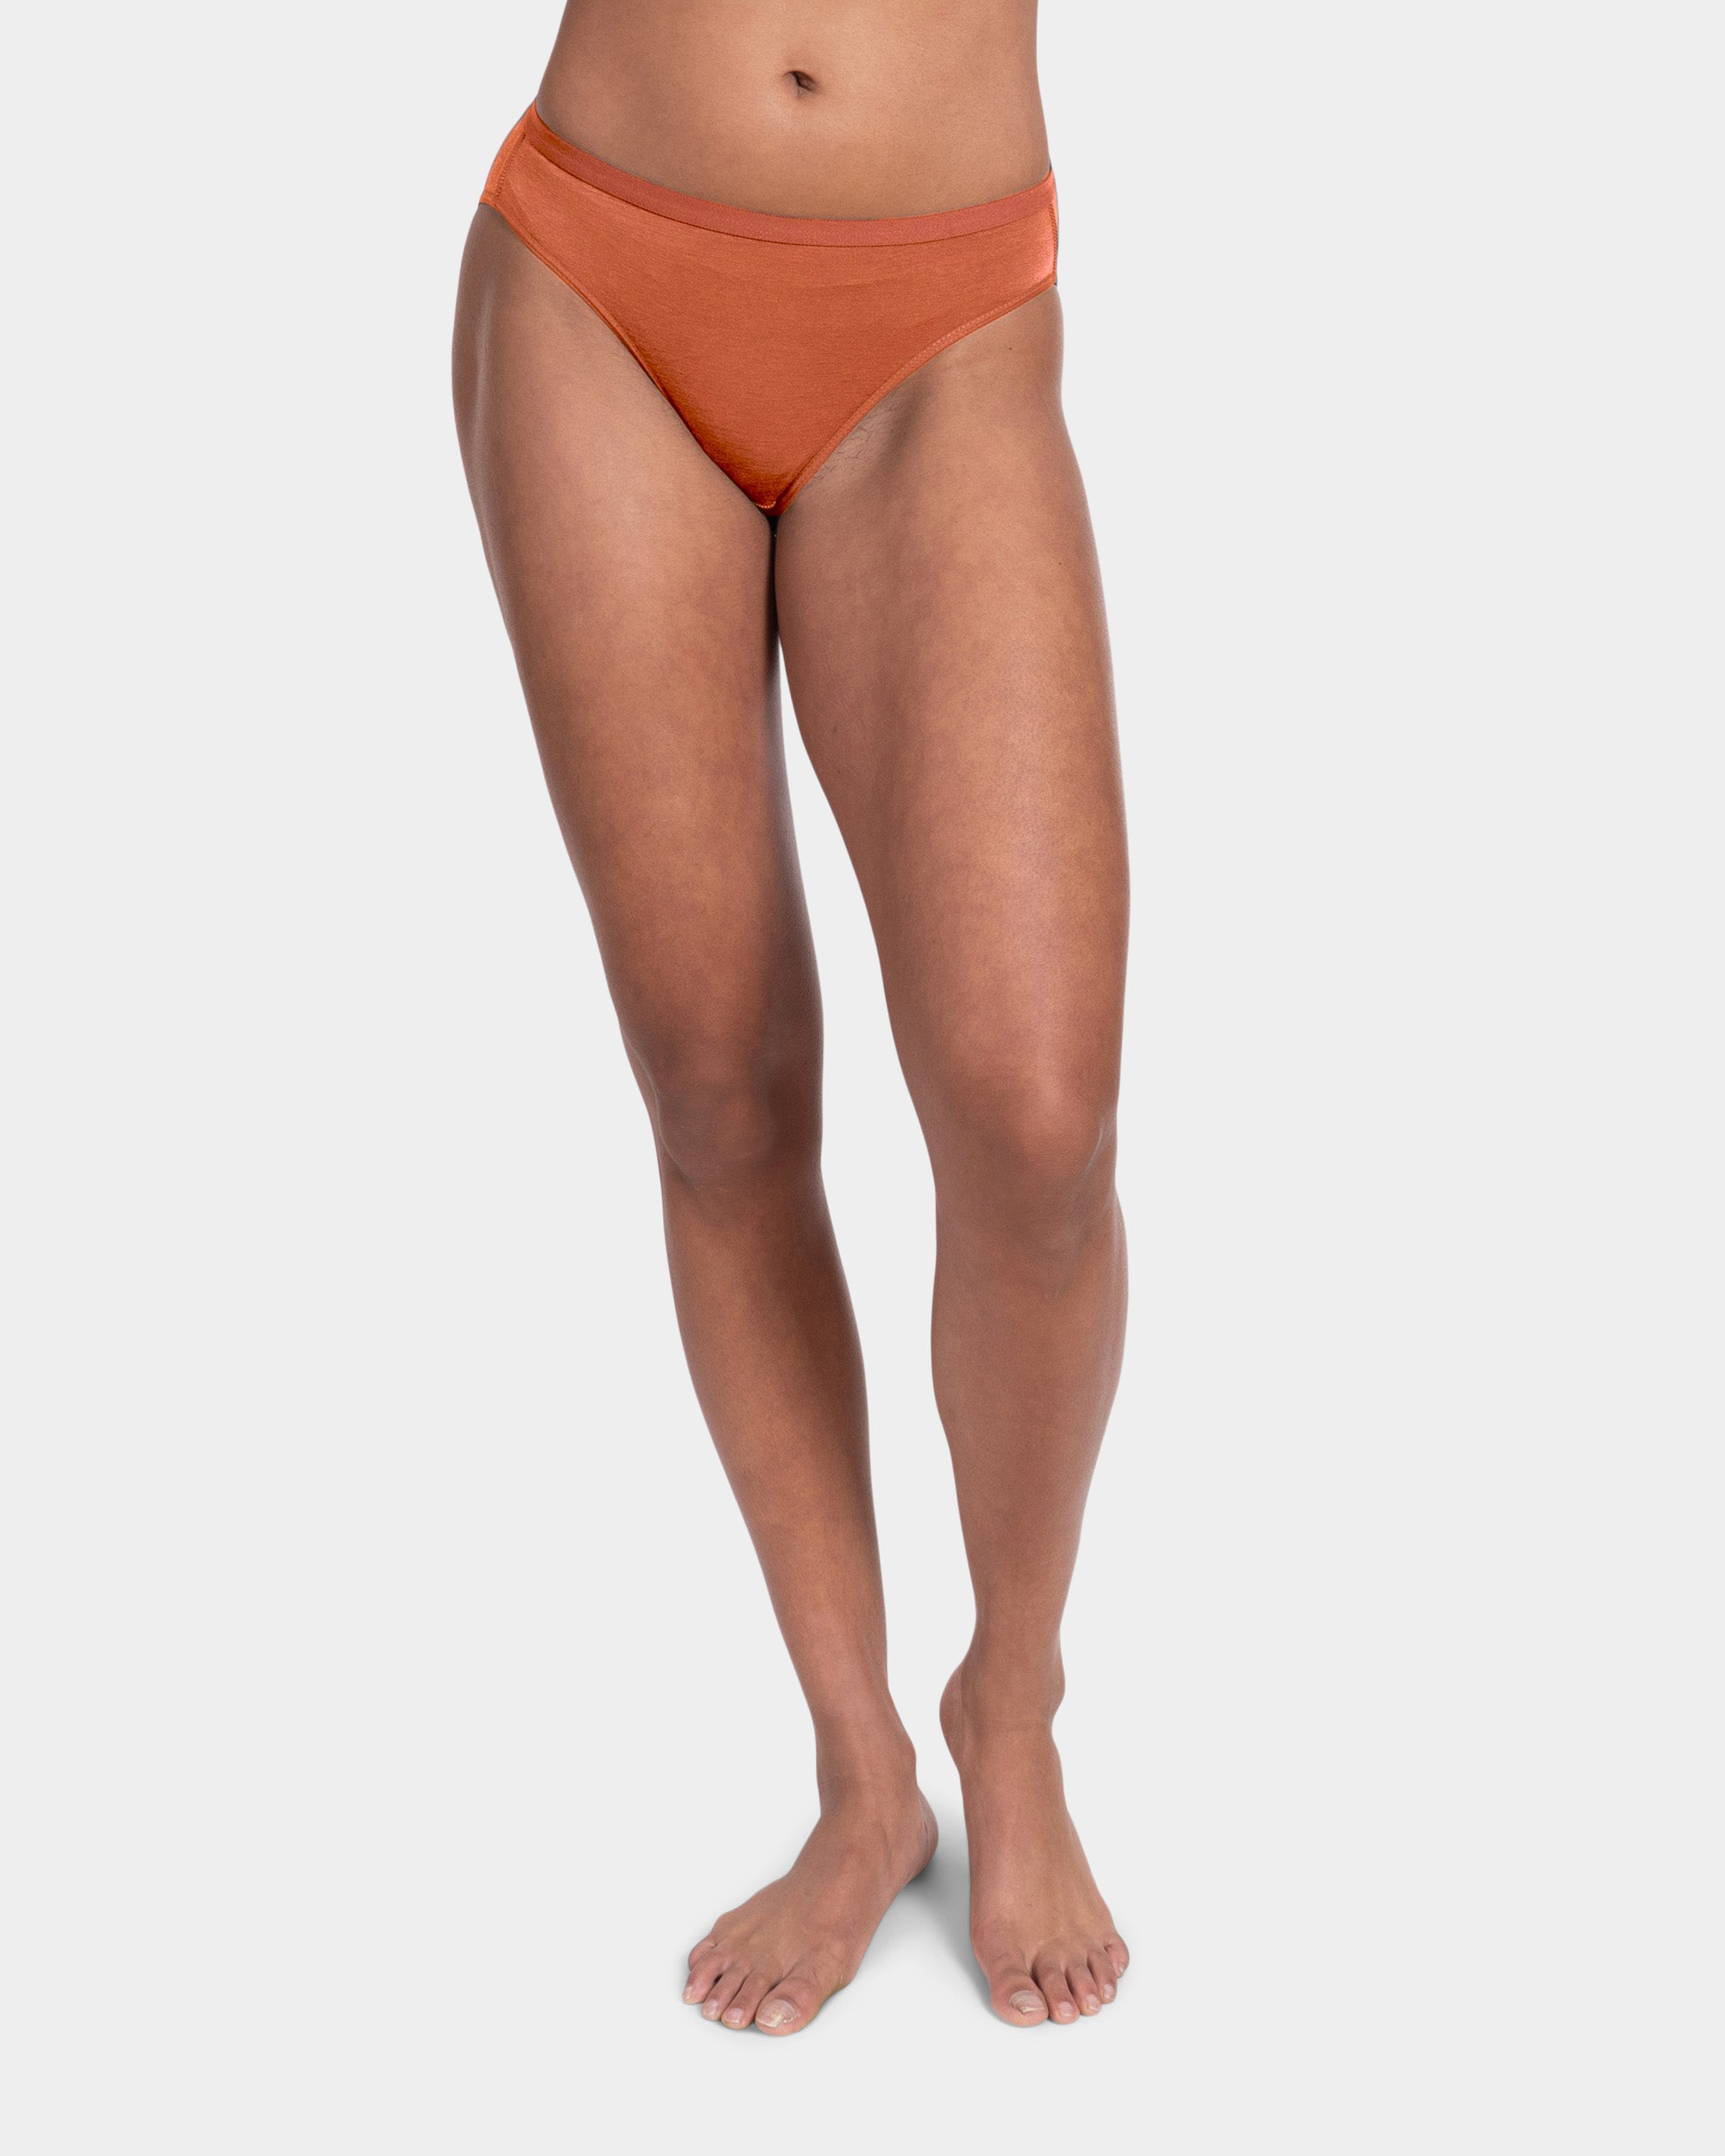 Undies.com Women's 6-Pack Cotton Hipkini Panties Underwear